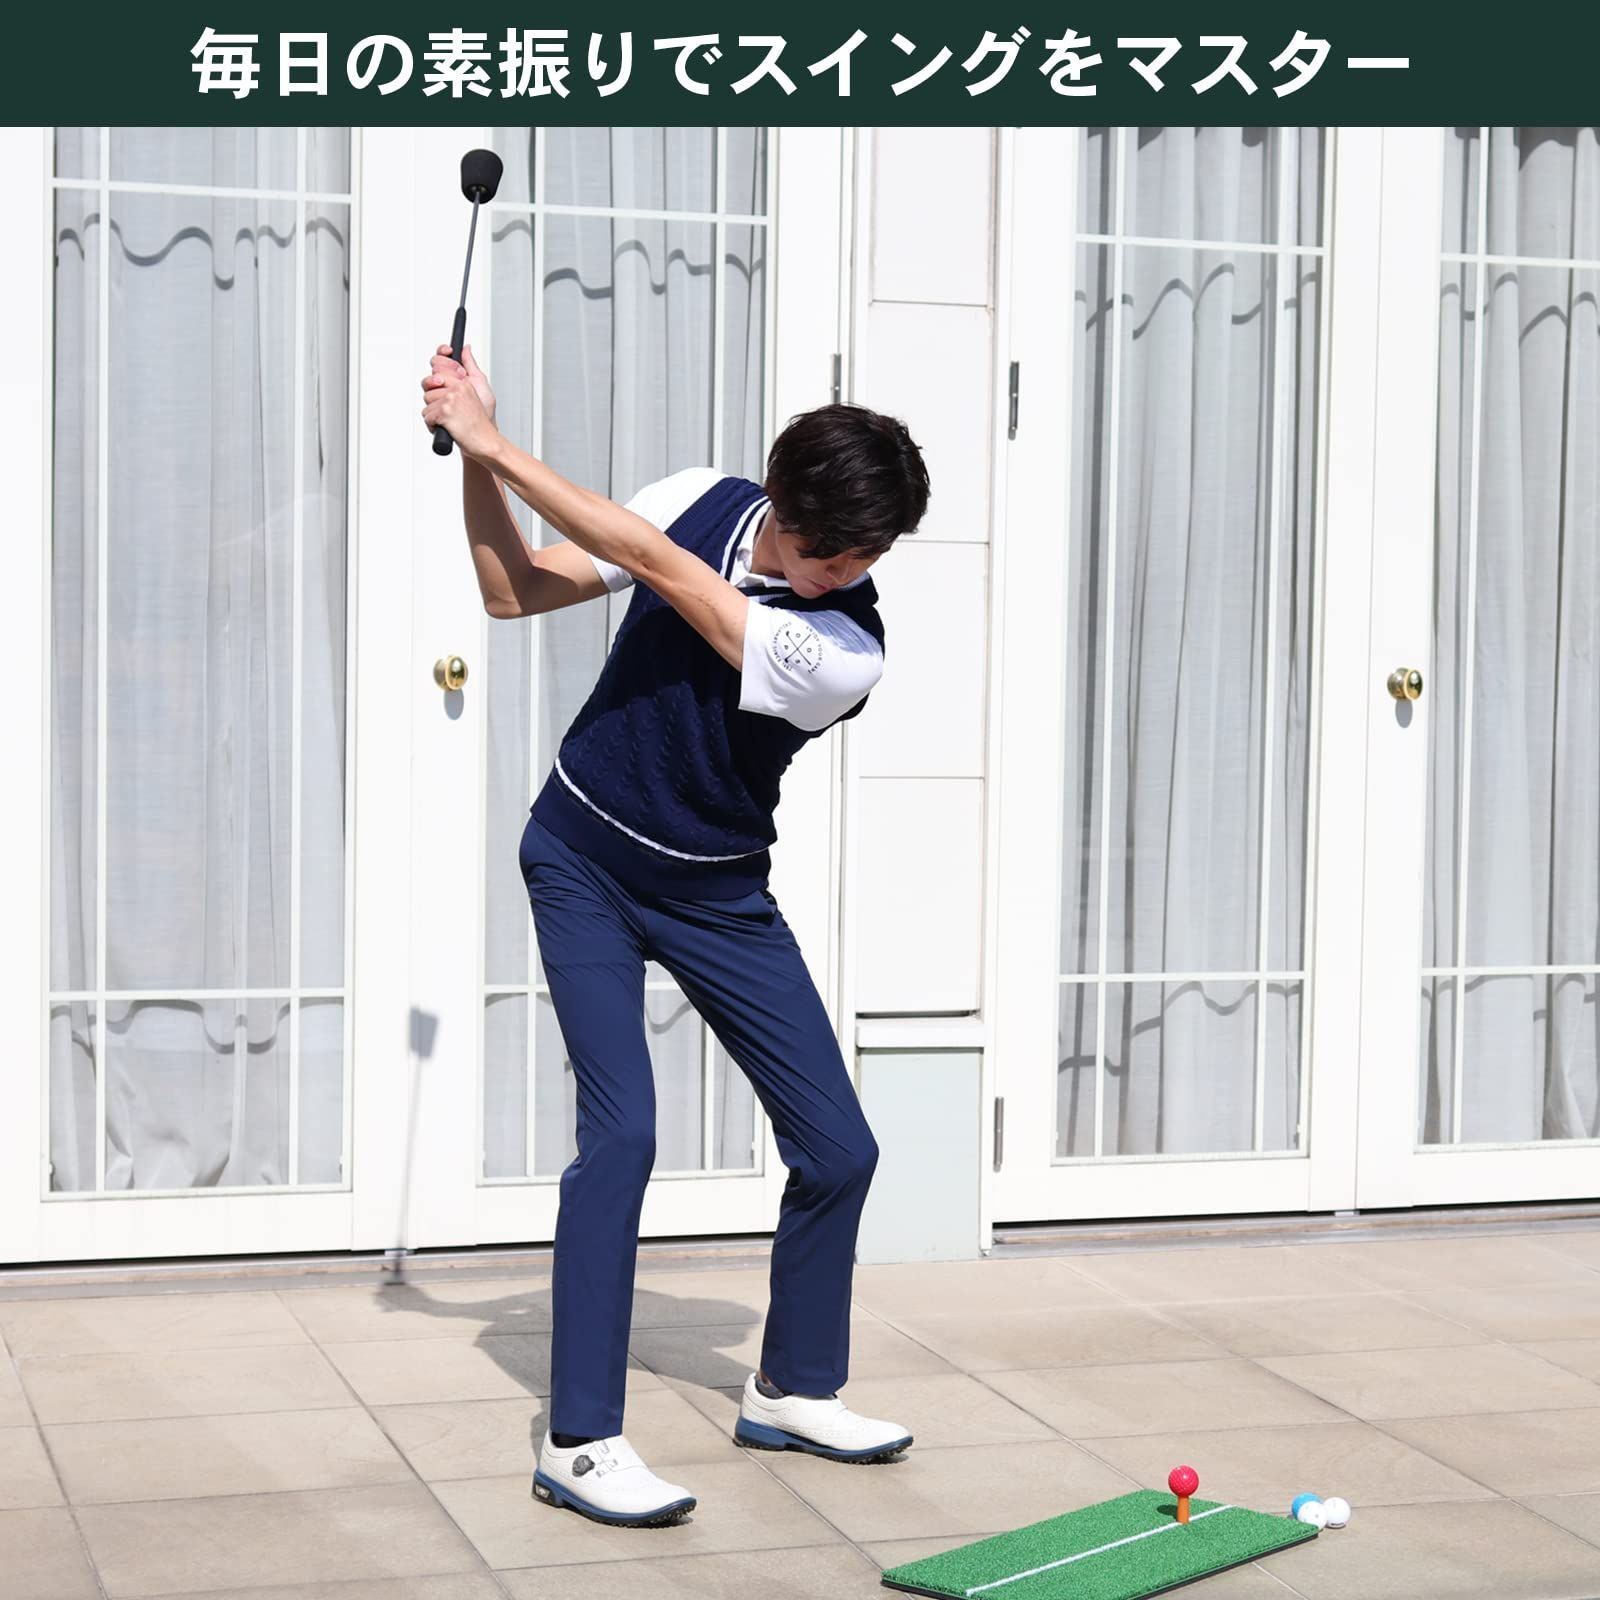 Tabata(タバタ) ゴルフ 素振り トレーニング 練習器具 スイング